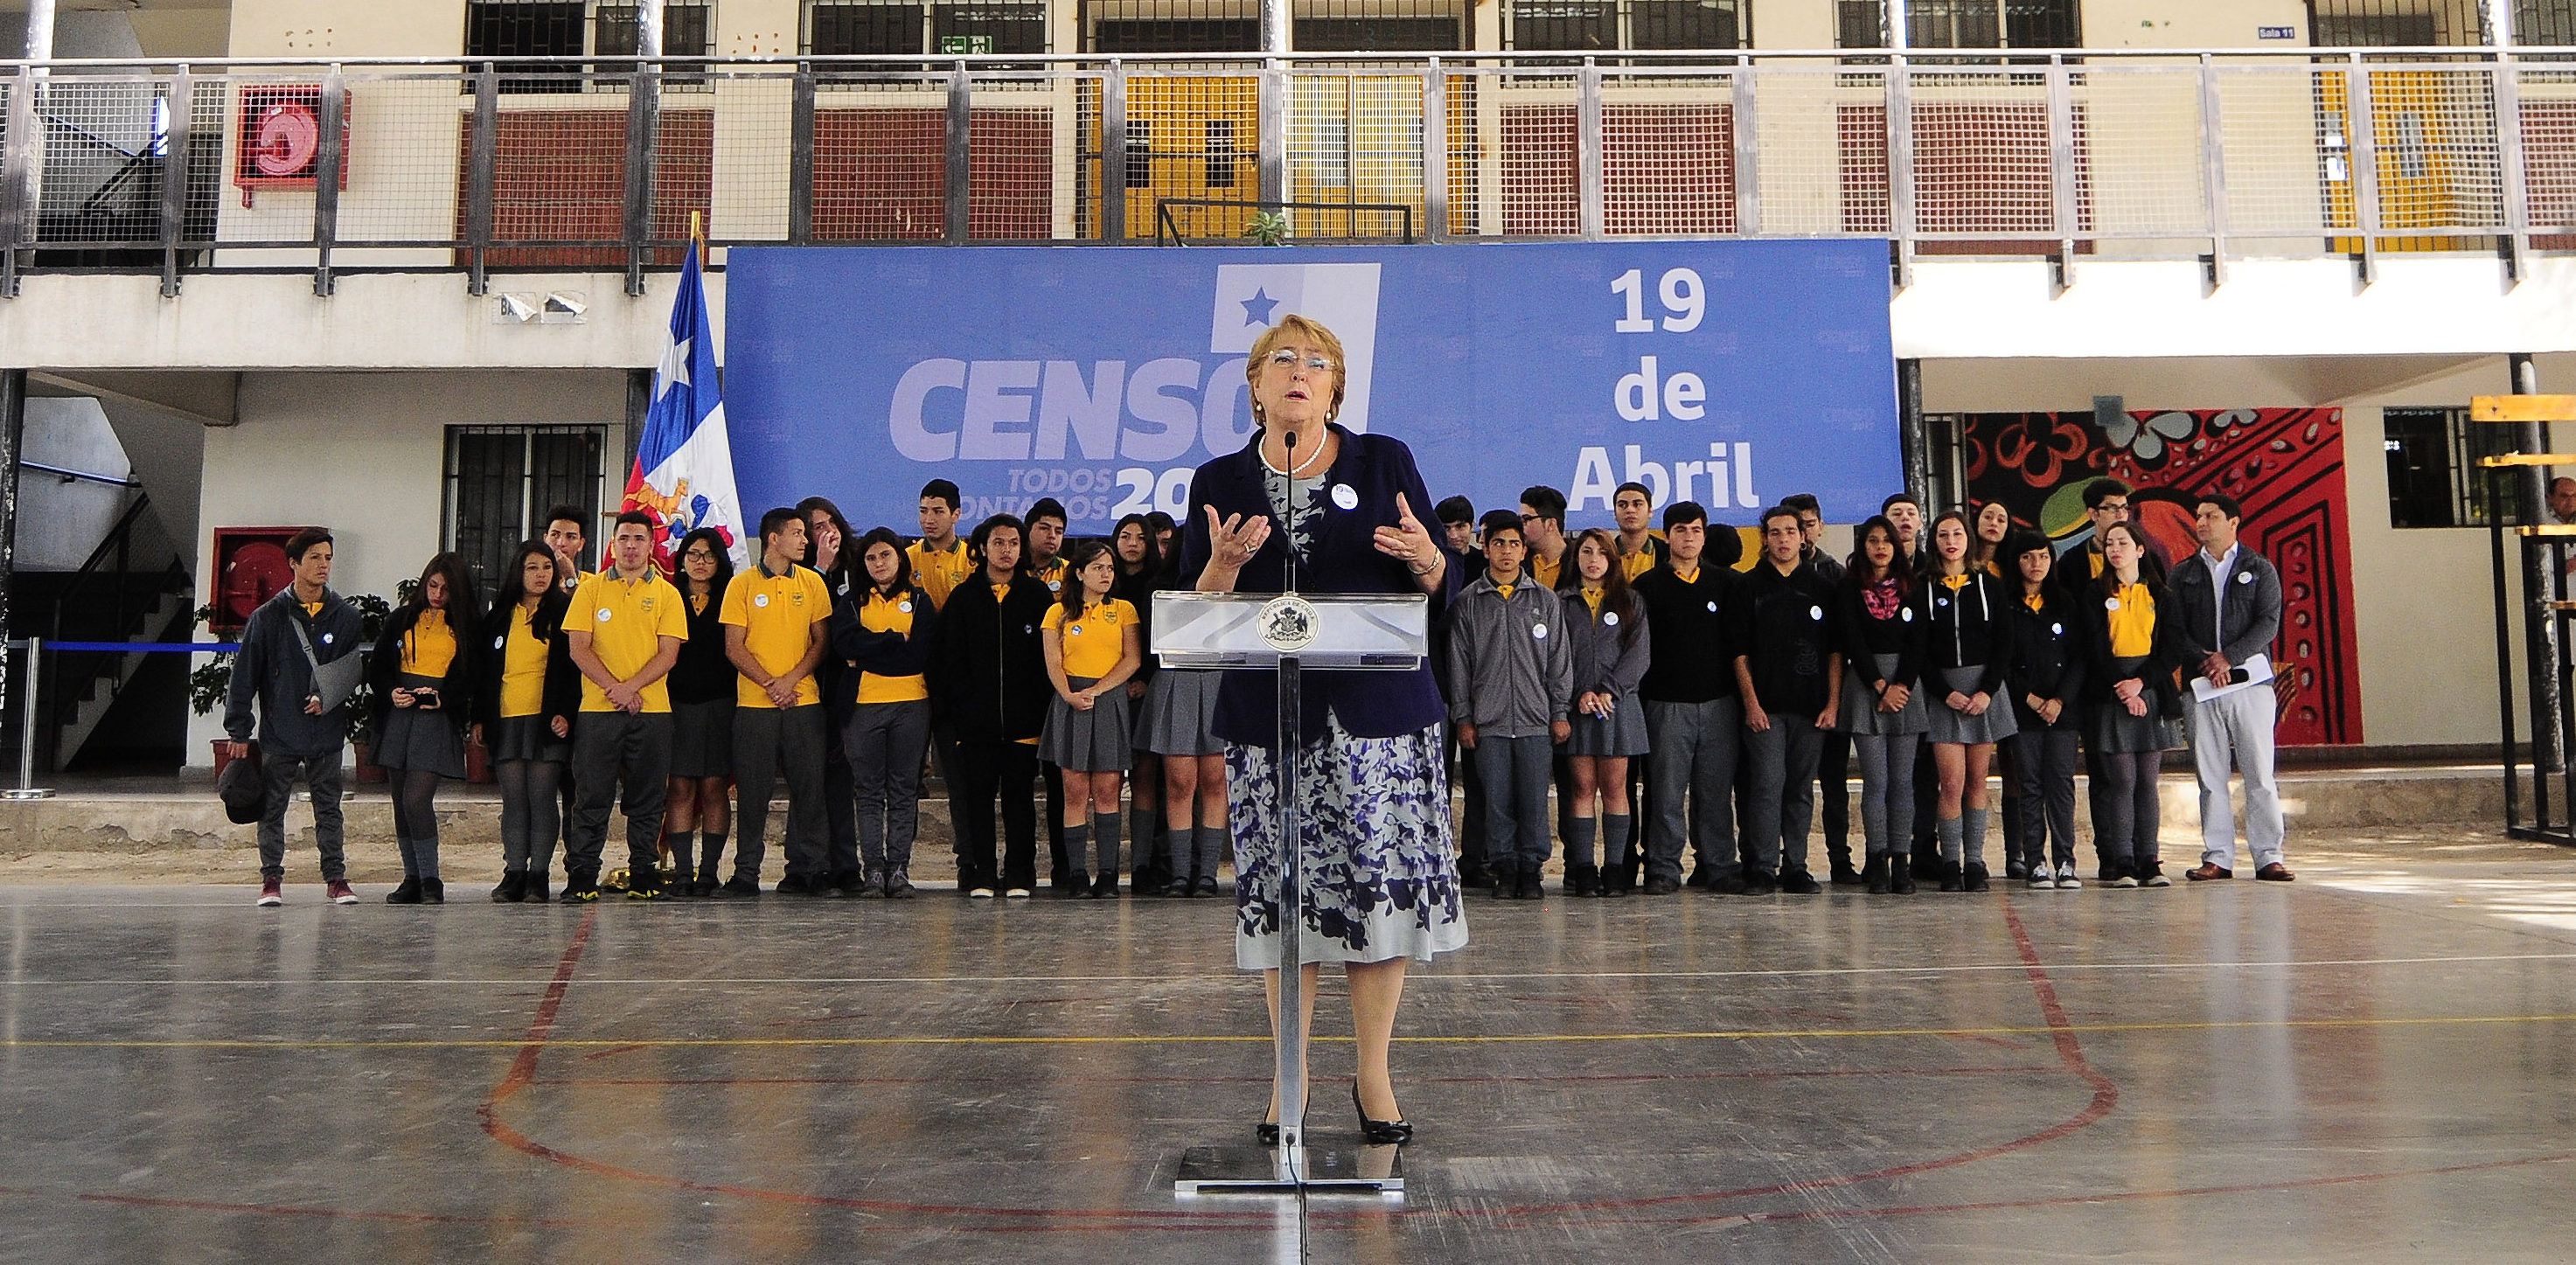 La presidenta Michelle Bachelet participa en jornada educativa Censo 2017